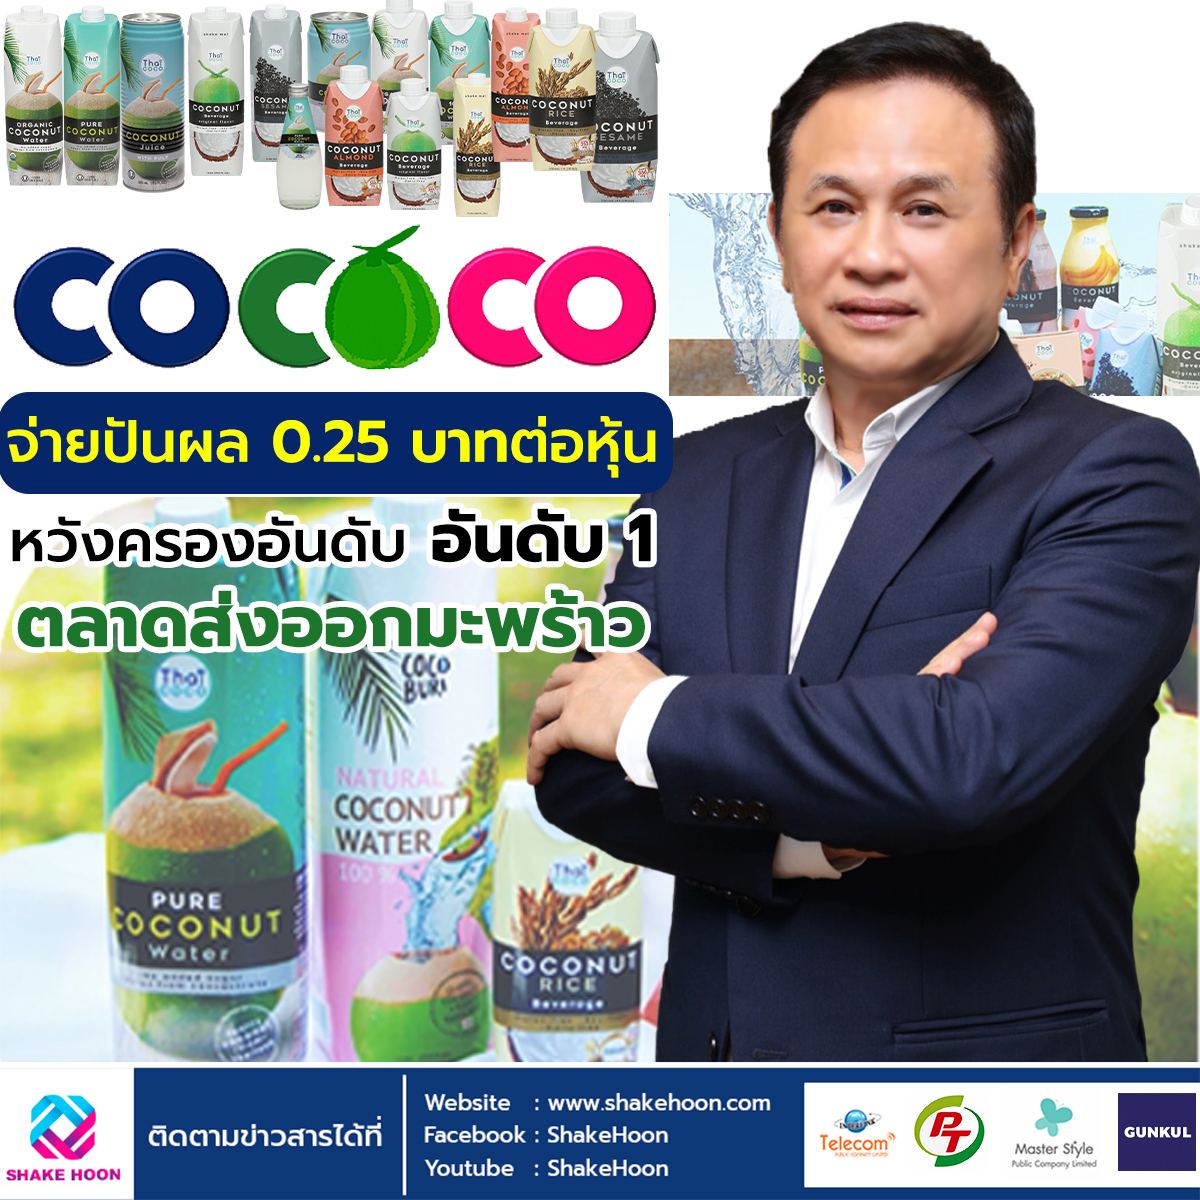 COCOCO จ่ายปันผล 0.25 บาทต่อหุ้น หวังครองอันดับ อันดับ 1 ตลาดส่งออกมะพร้าว